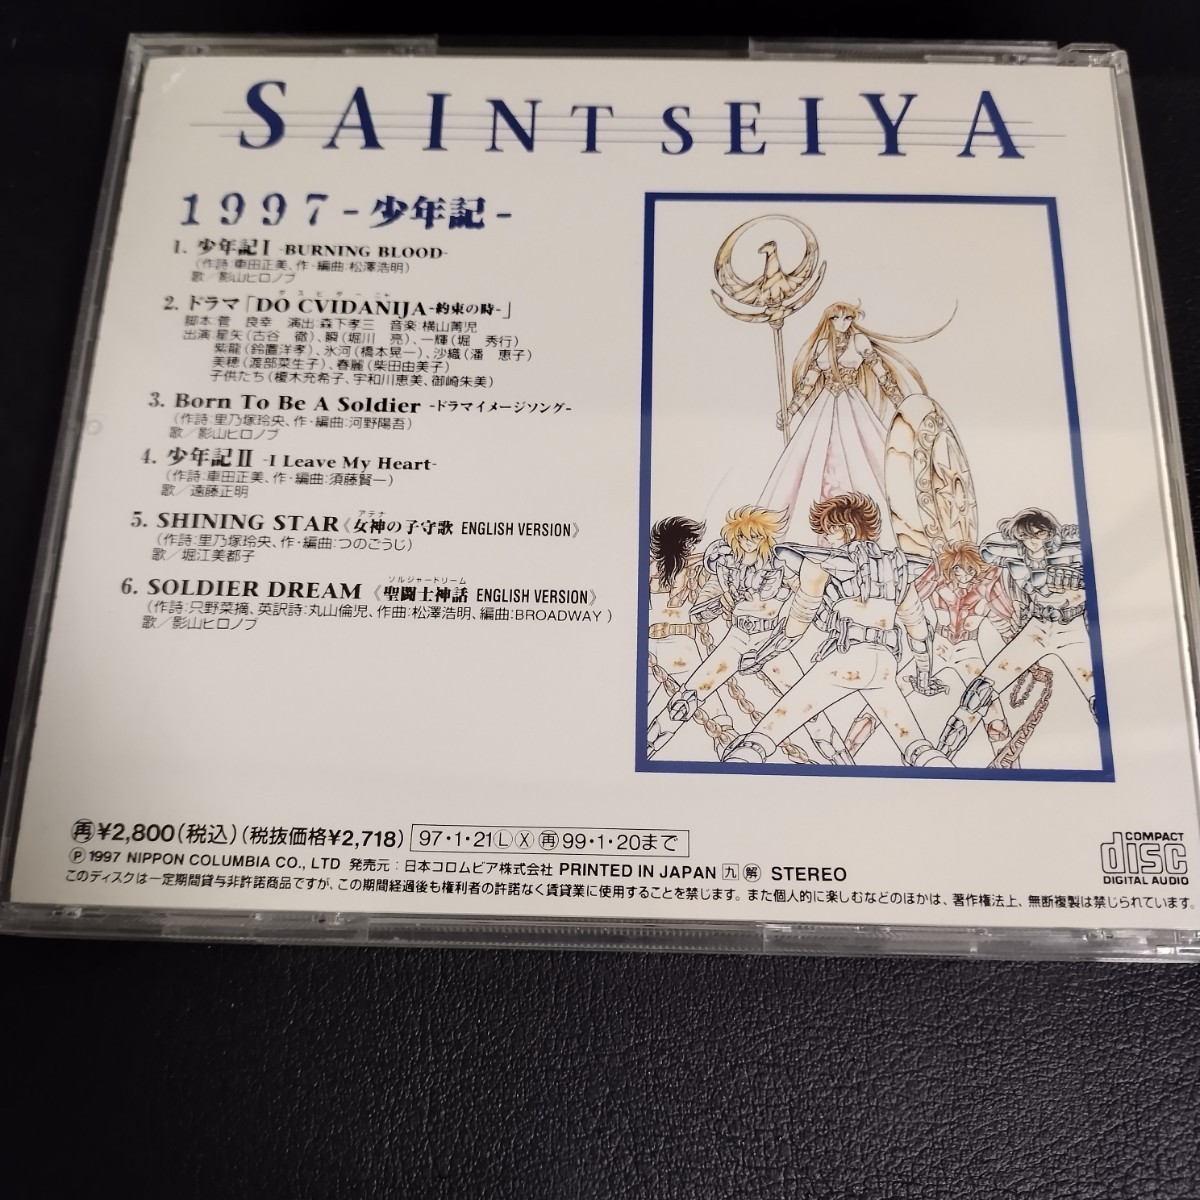 【SAINT SEIYA】 1997-少年記- 聖闘士星矢 アニメ系CD_画像2